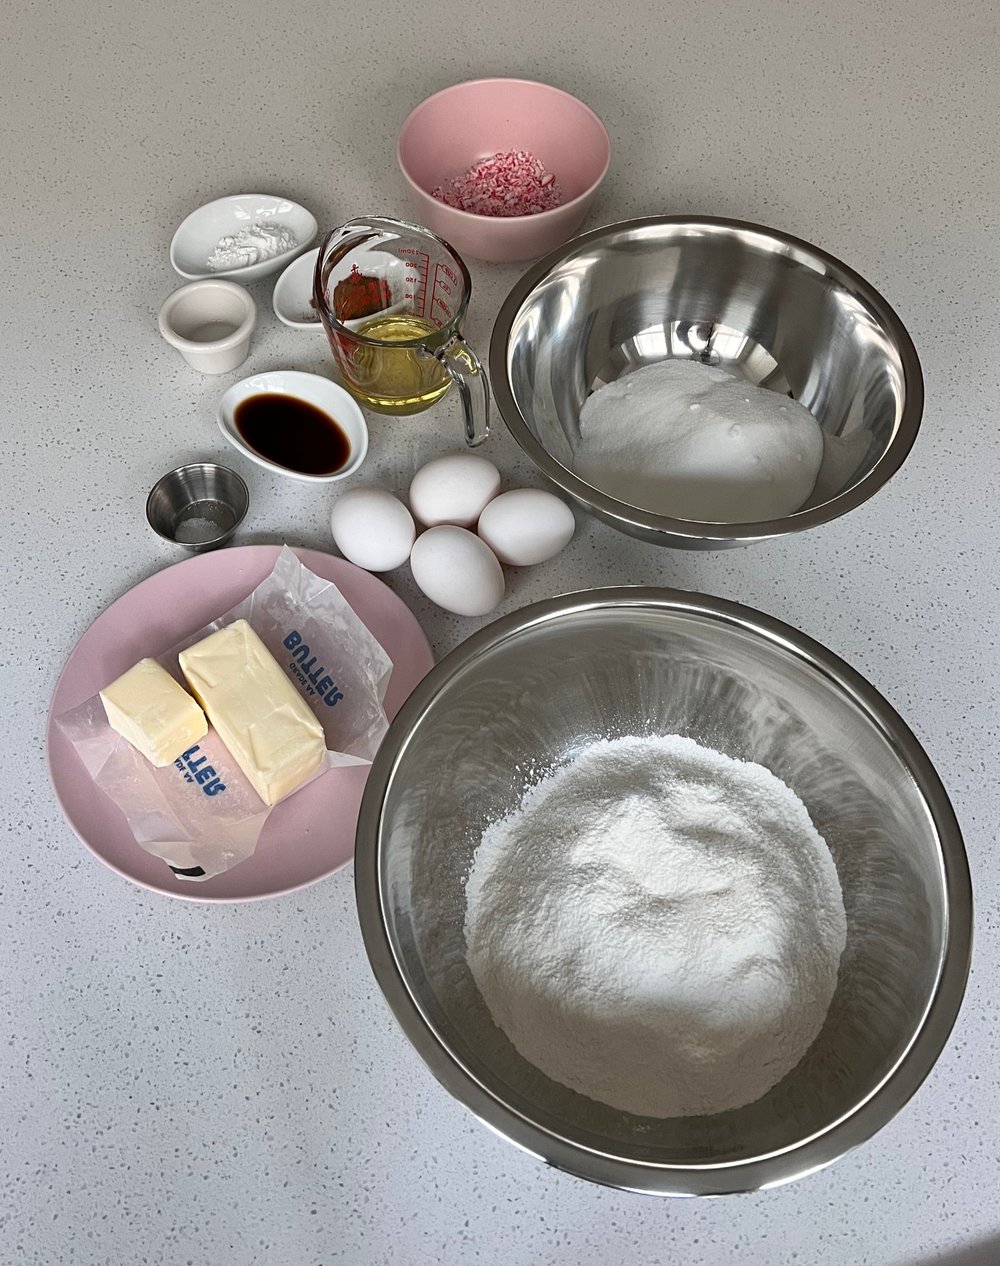  Ingredients for peppermint churro cake: flour, sugar, butter, eggs, vanilla, oil, crushed peppermint, cinnamon, baking powder, salt 